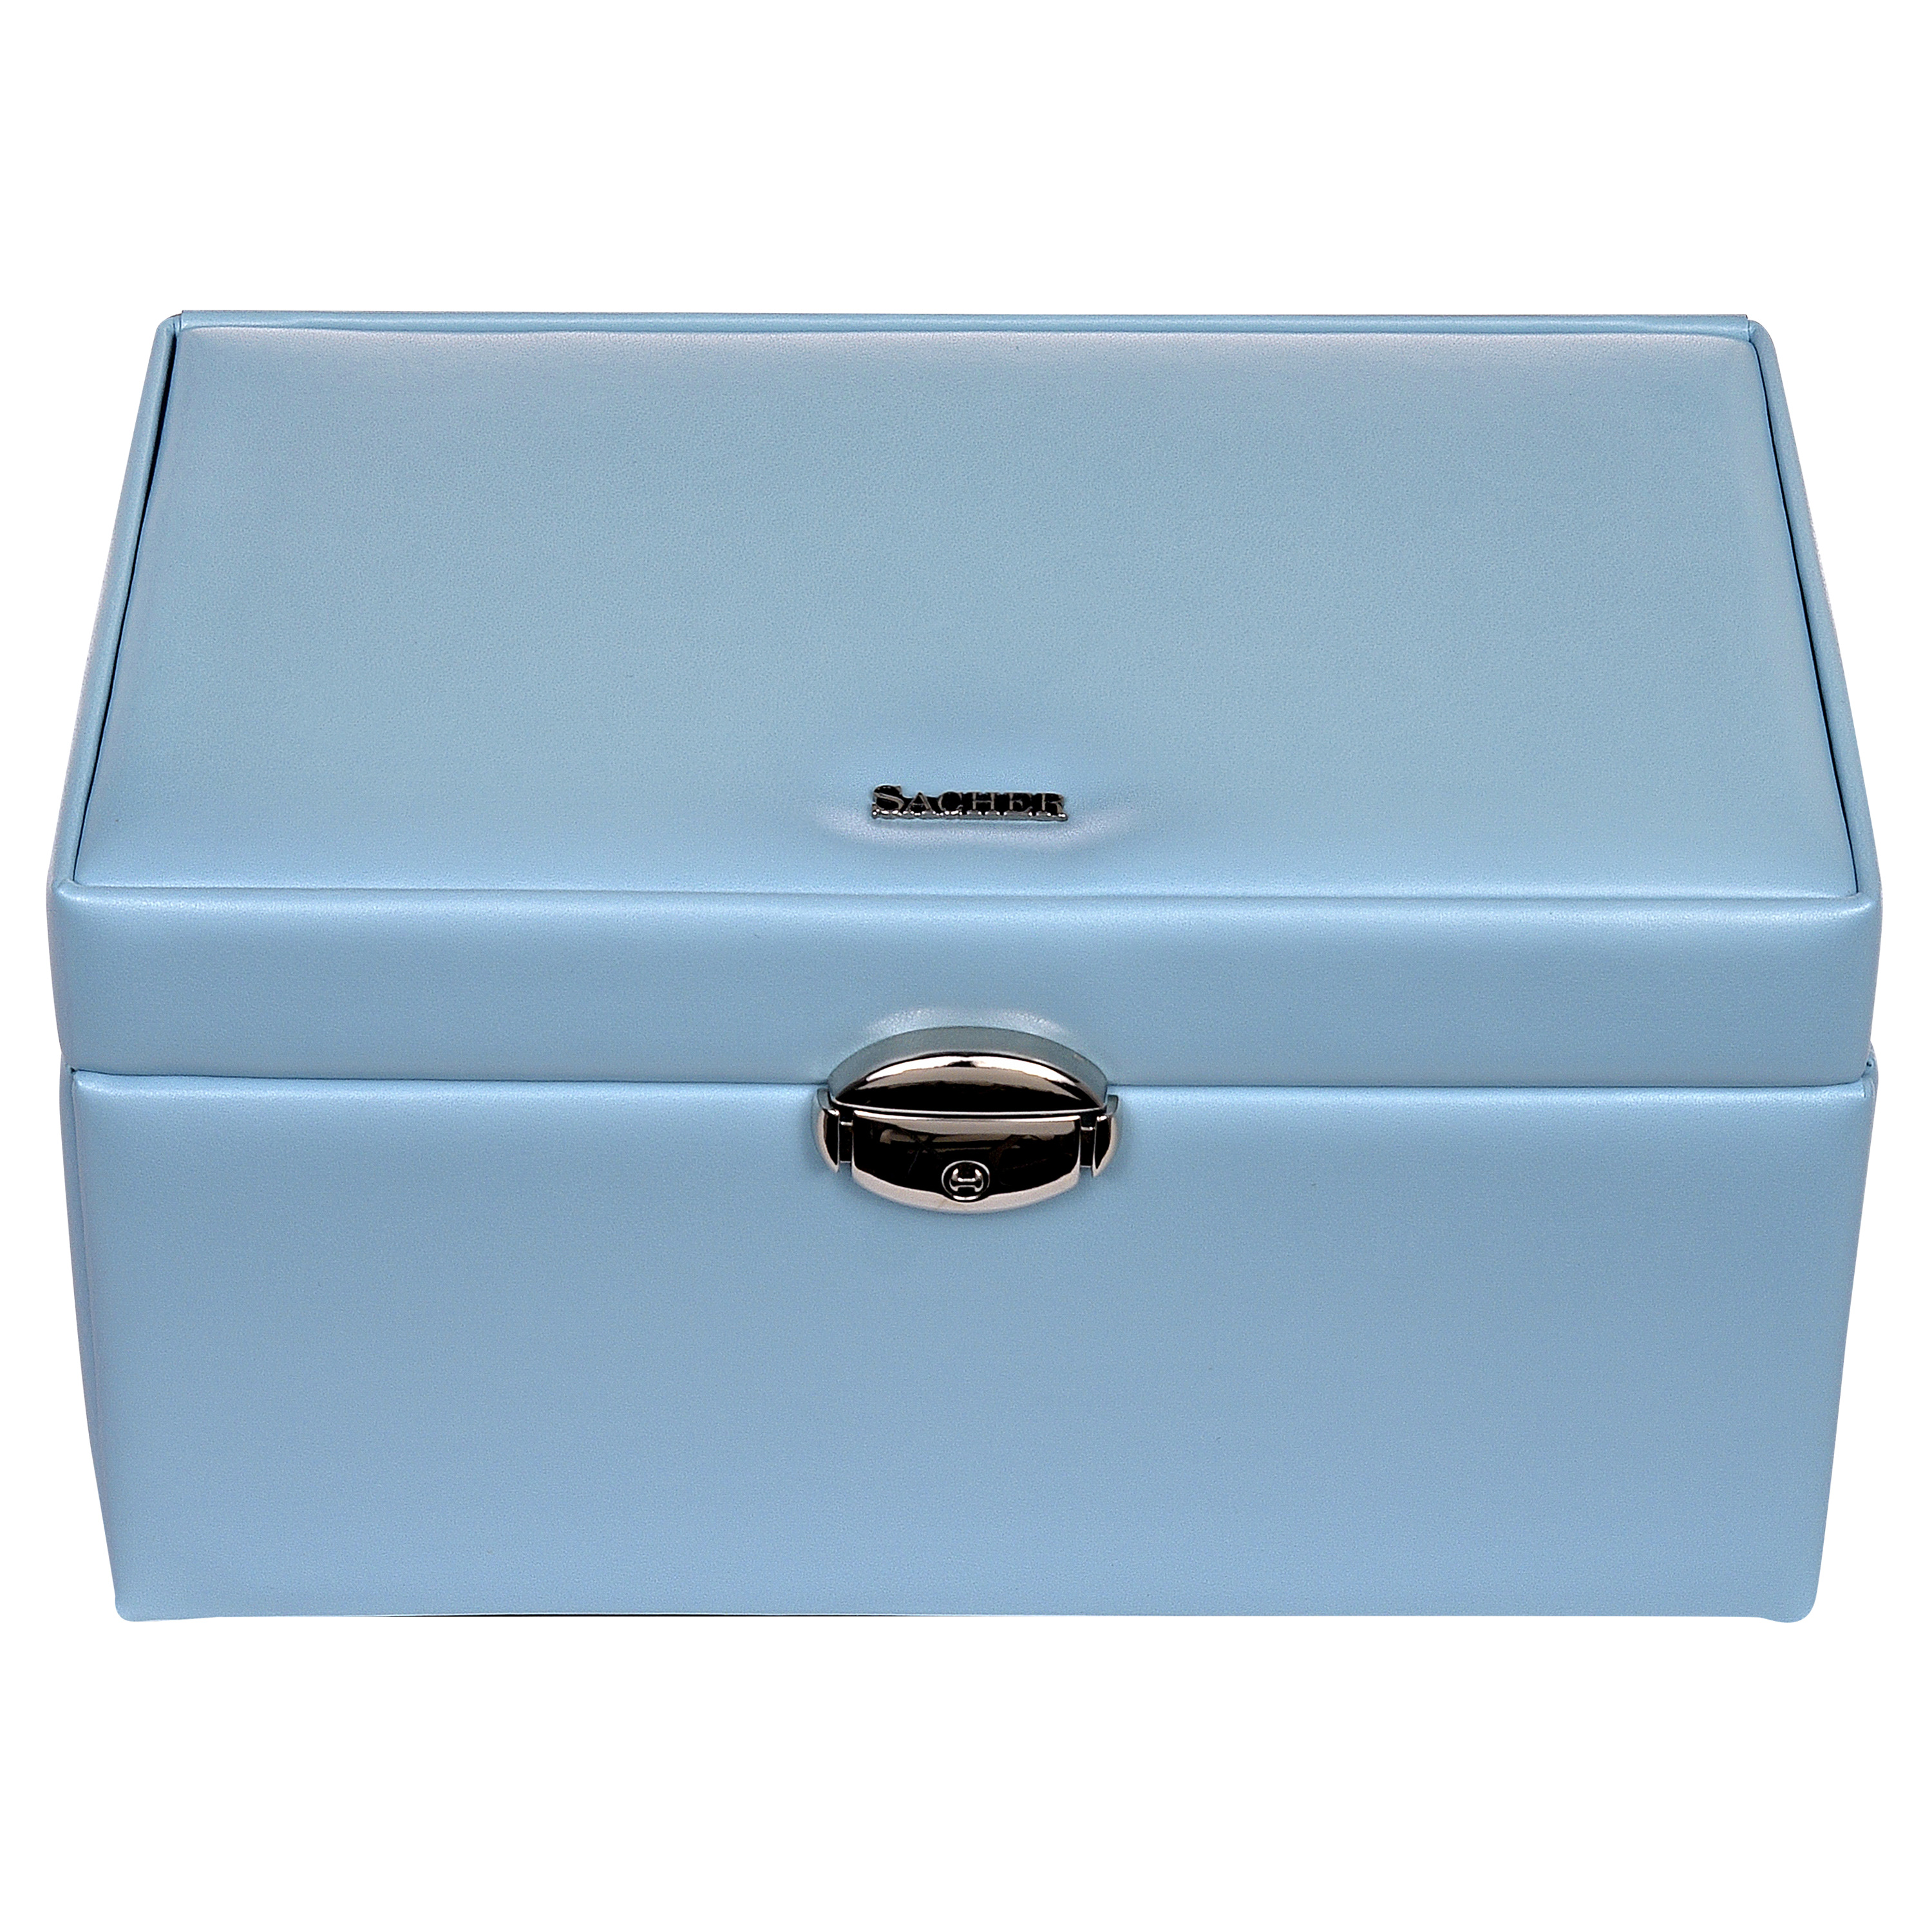 Jewellery box Elly coloranti / light blue